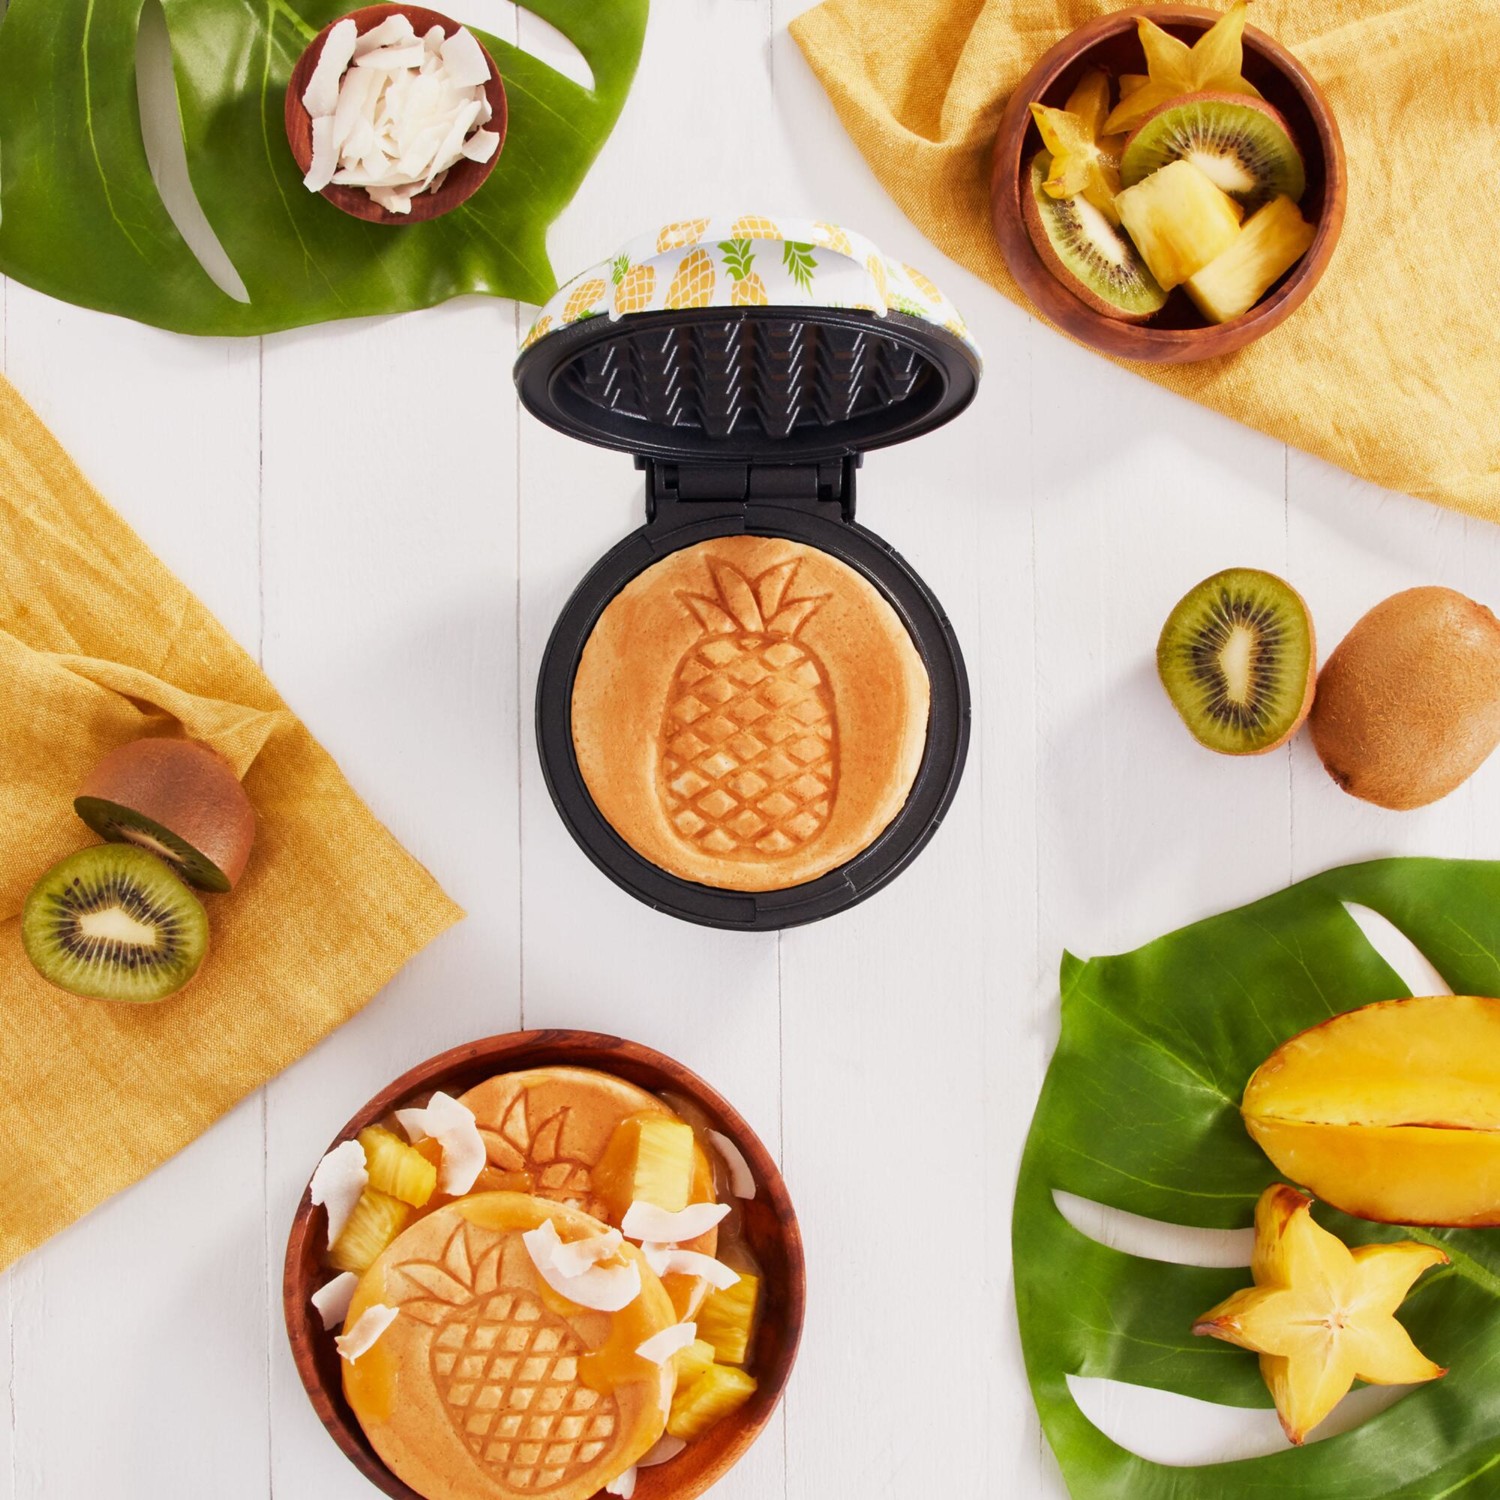 https://www.simplemost.com/wp-content/uploads/2021/03/dash-waffle-maker-pineapple.jpeg